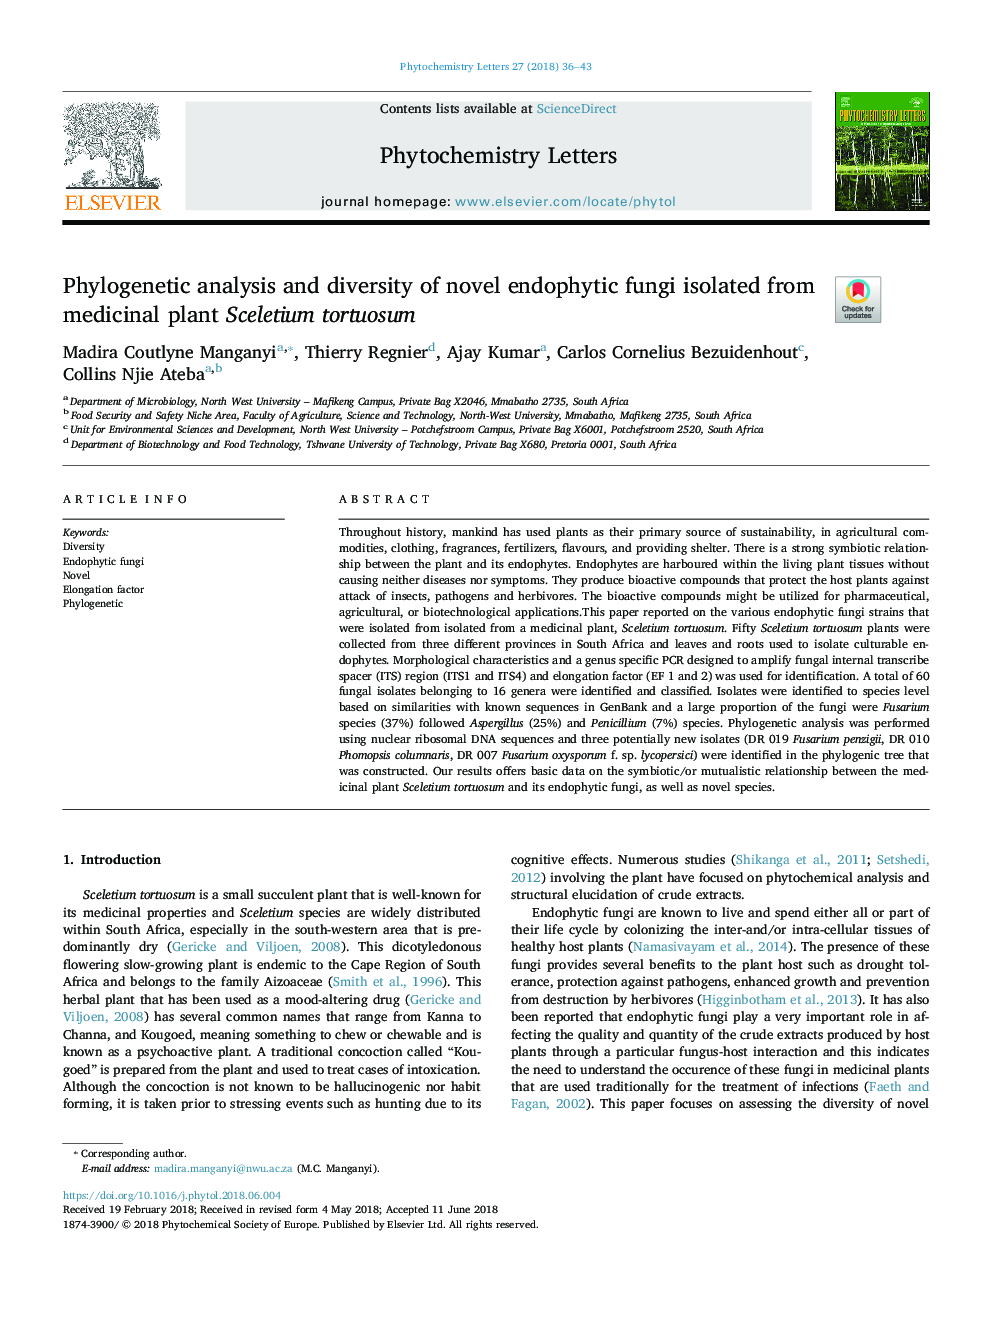 Phylogenetic analysis and diversity of novel endophytic fungi isolated from medicinal plant Sceletium tortuosum